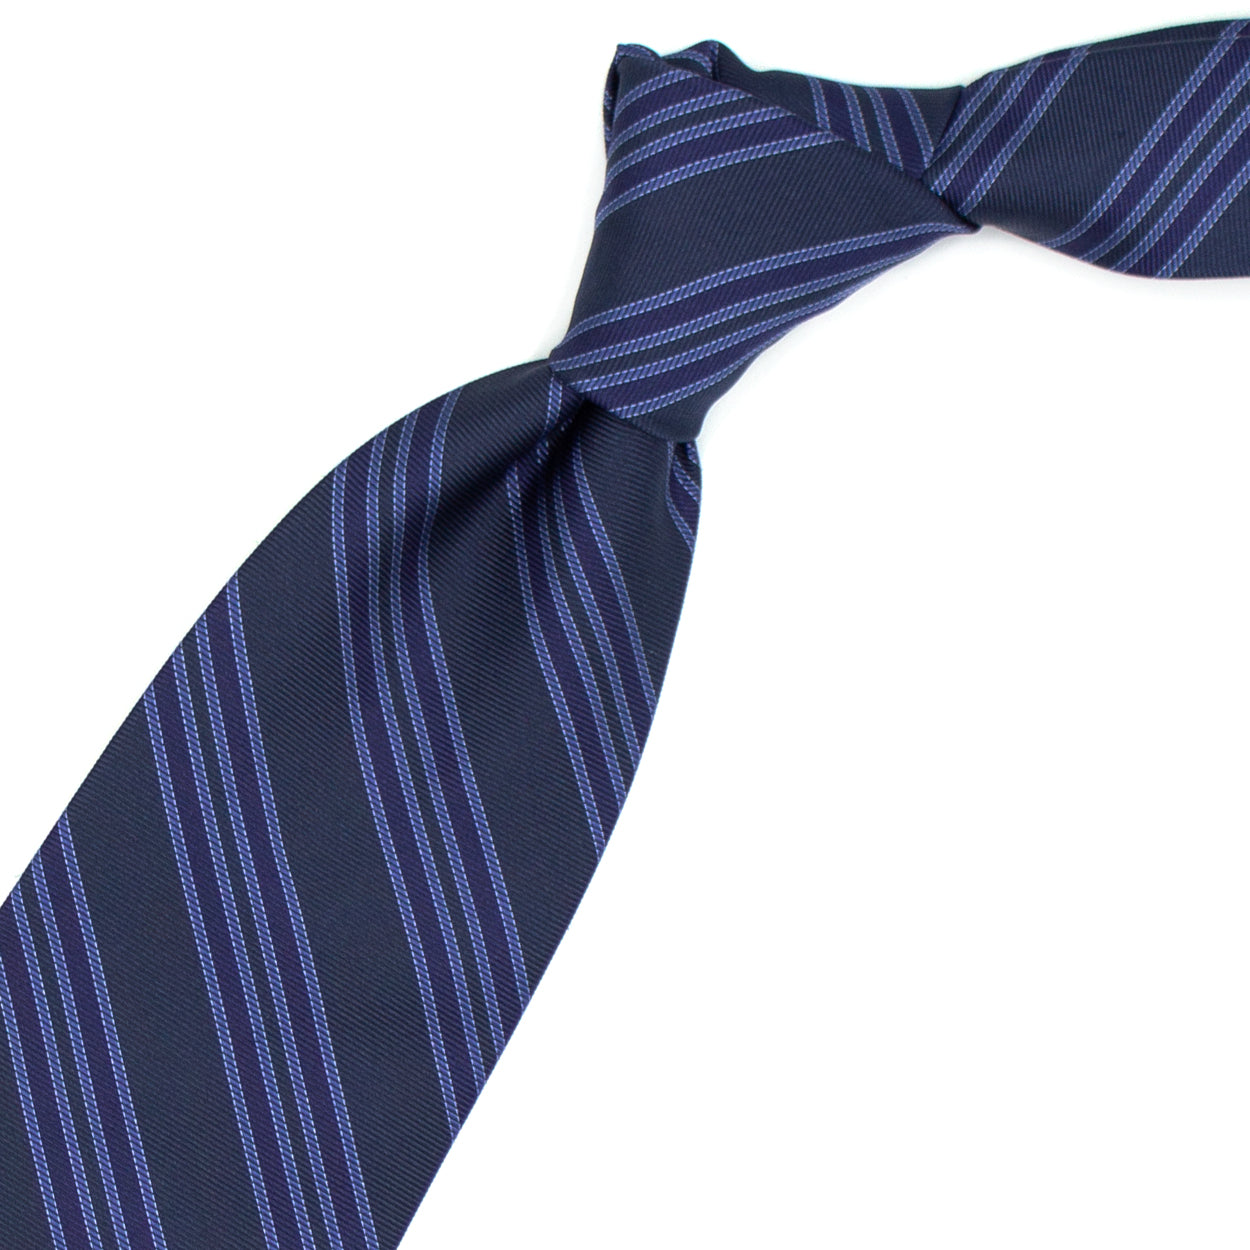 Blue tie with blue stripes